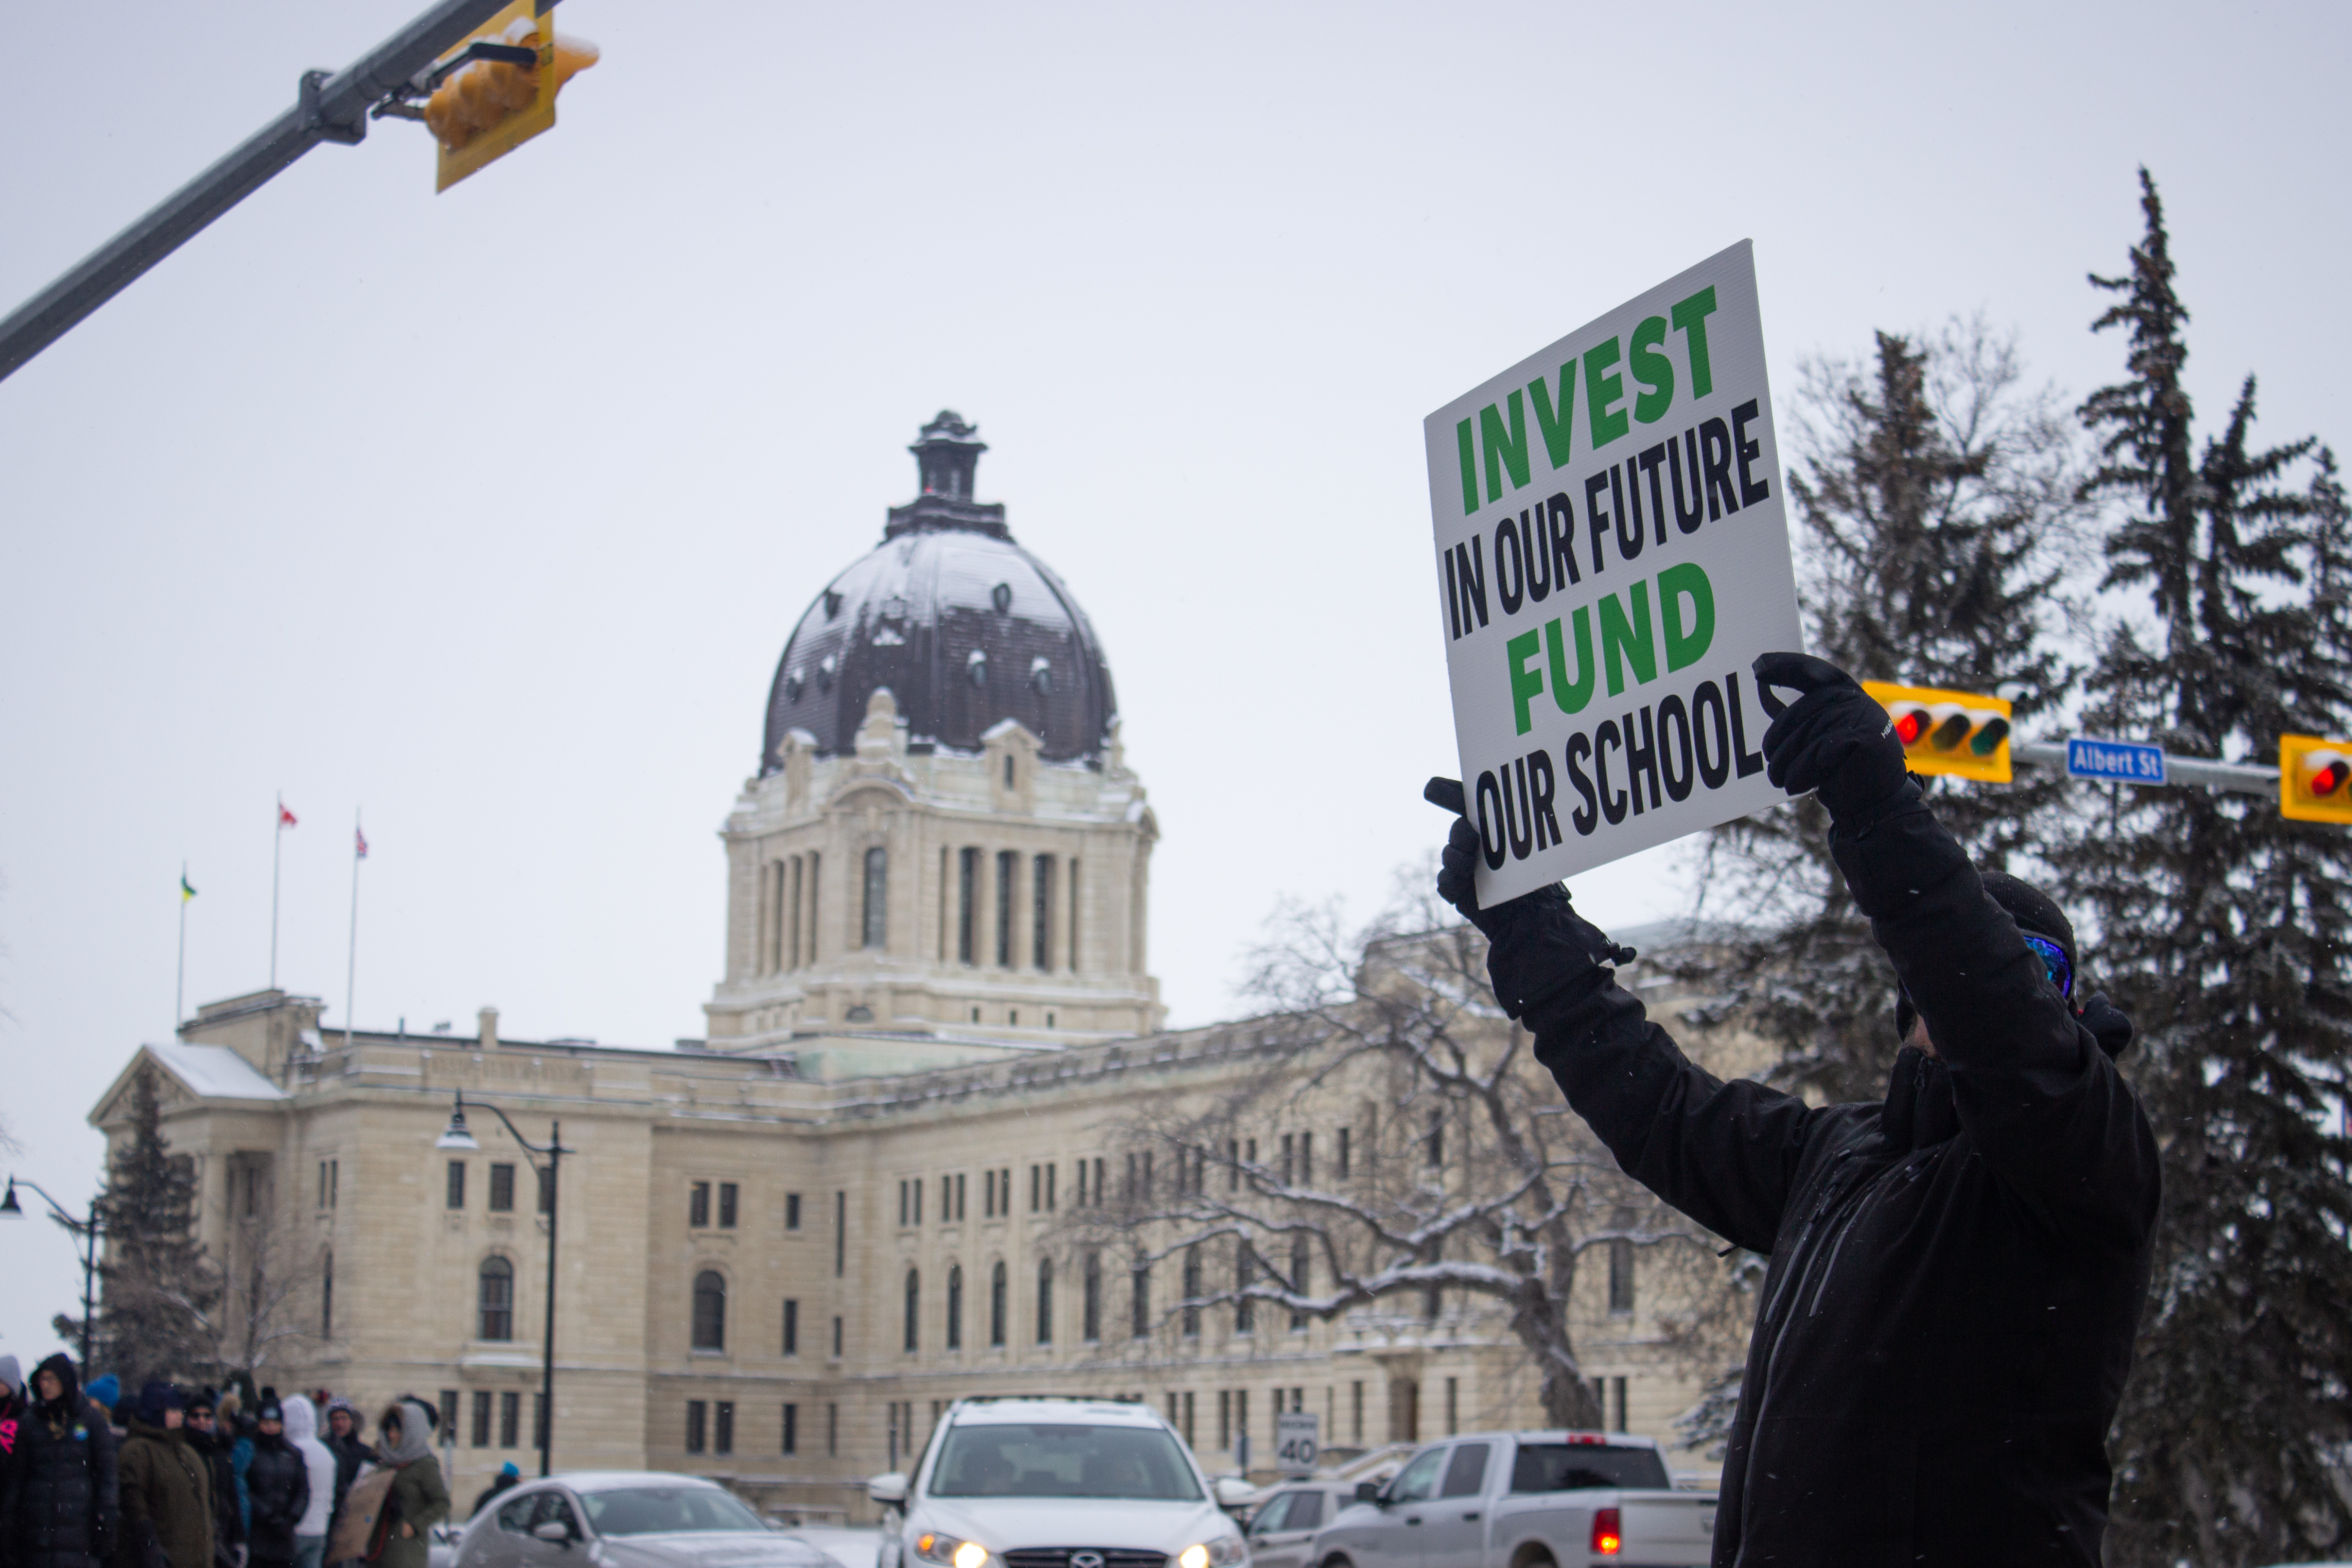 In photos: Teachers across Saskatchewan strike for better classroom conditions